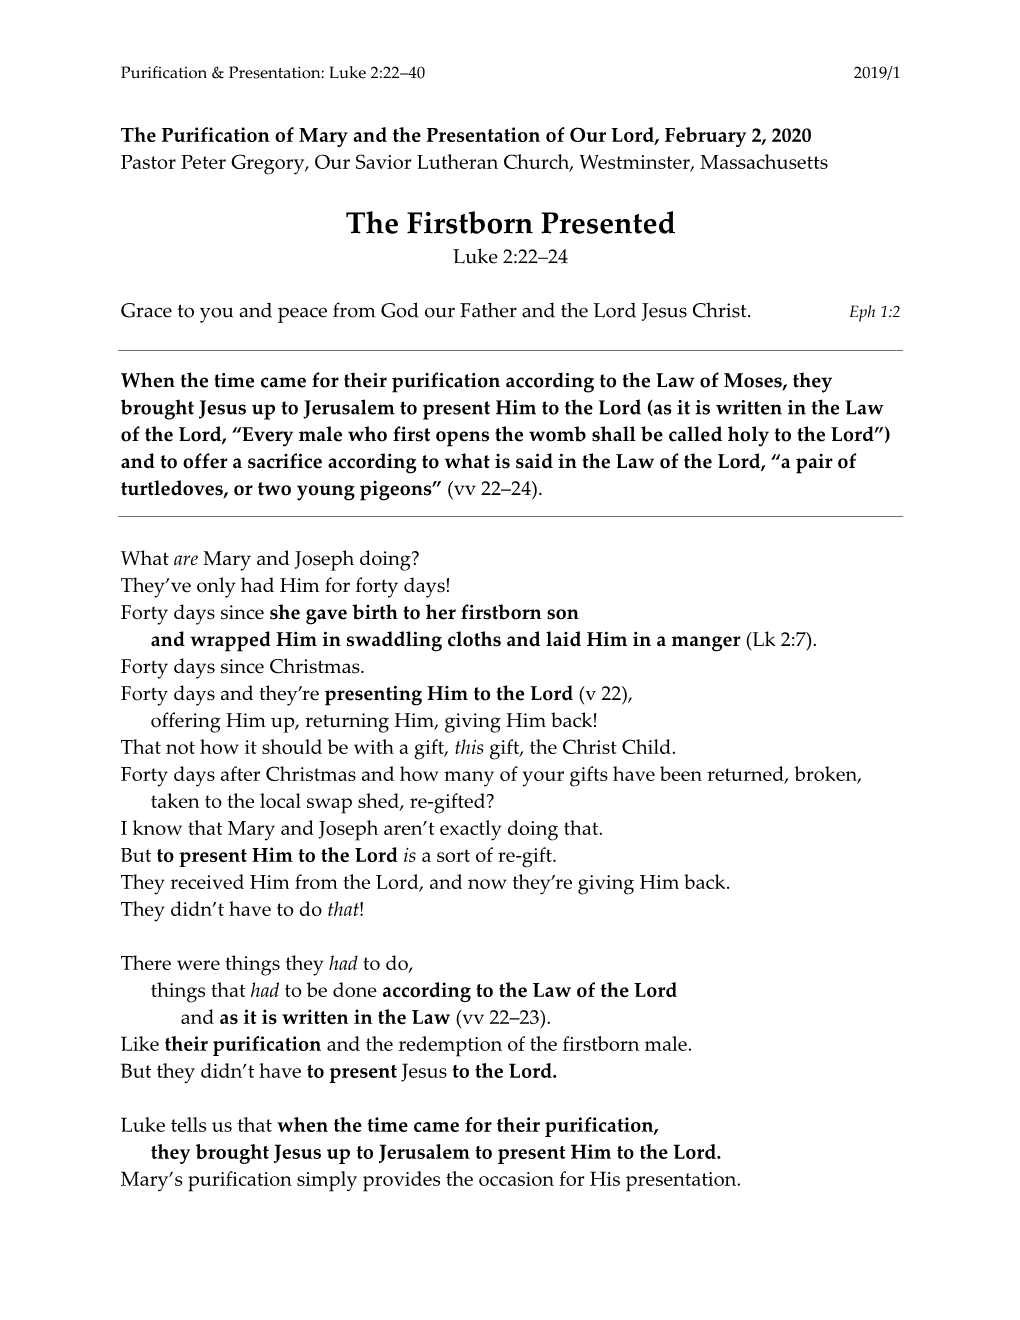 The Firstborn Presented Luke 2:22–24